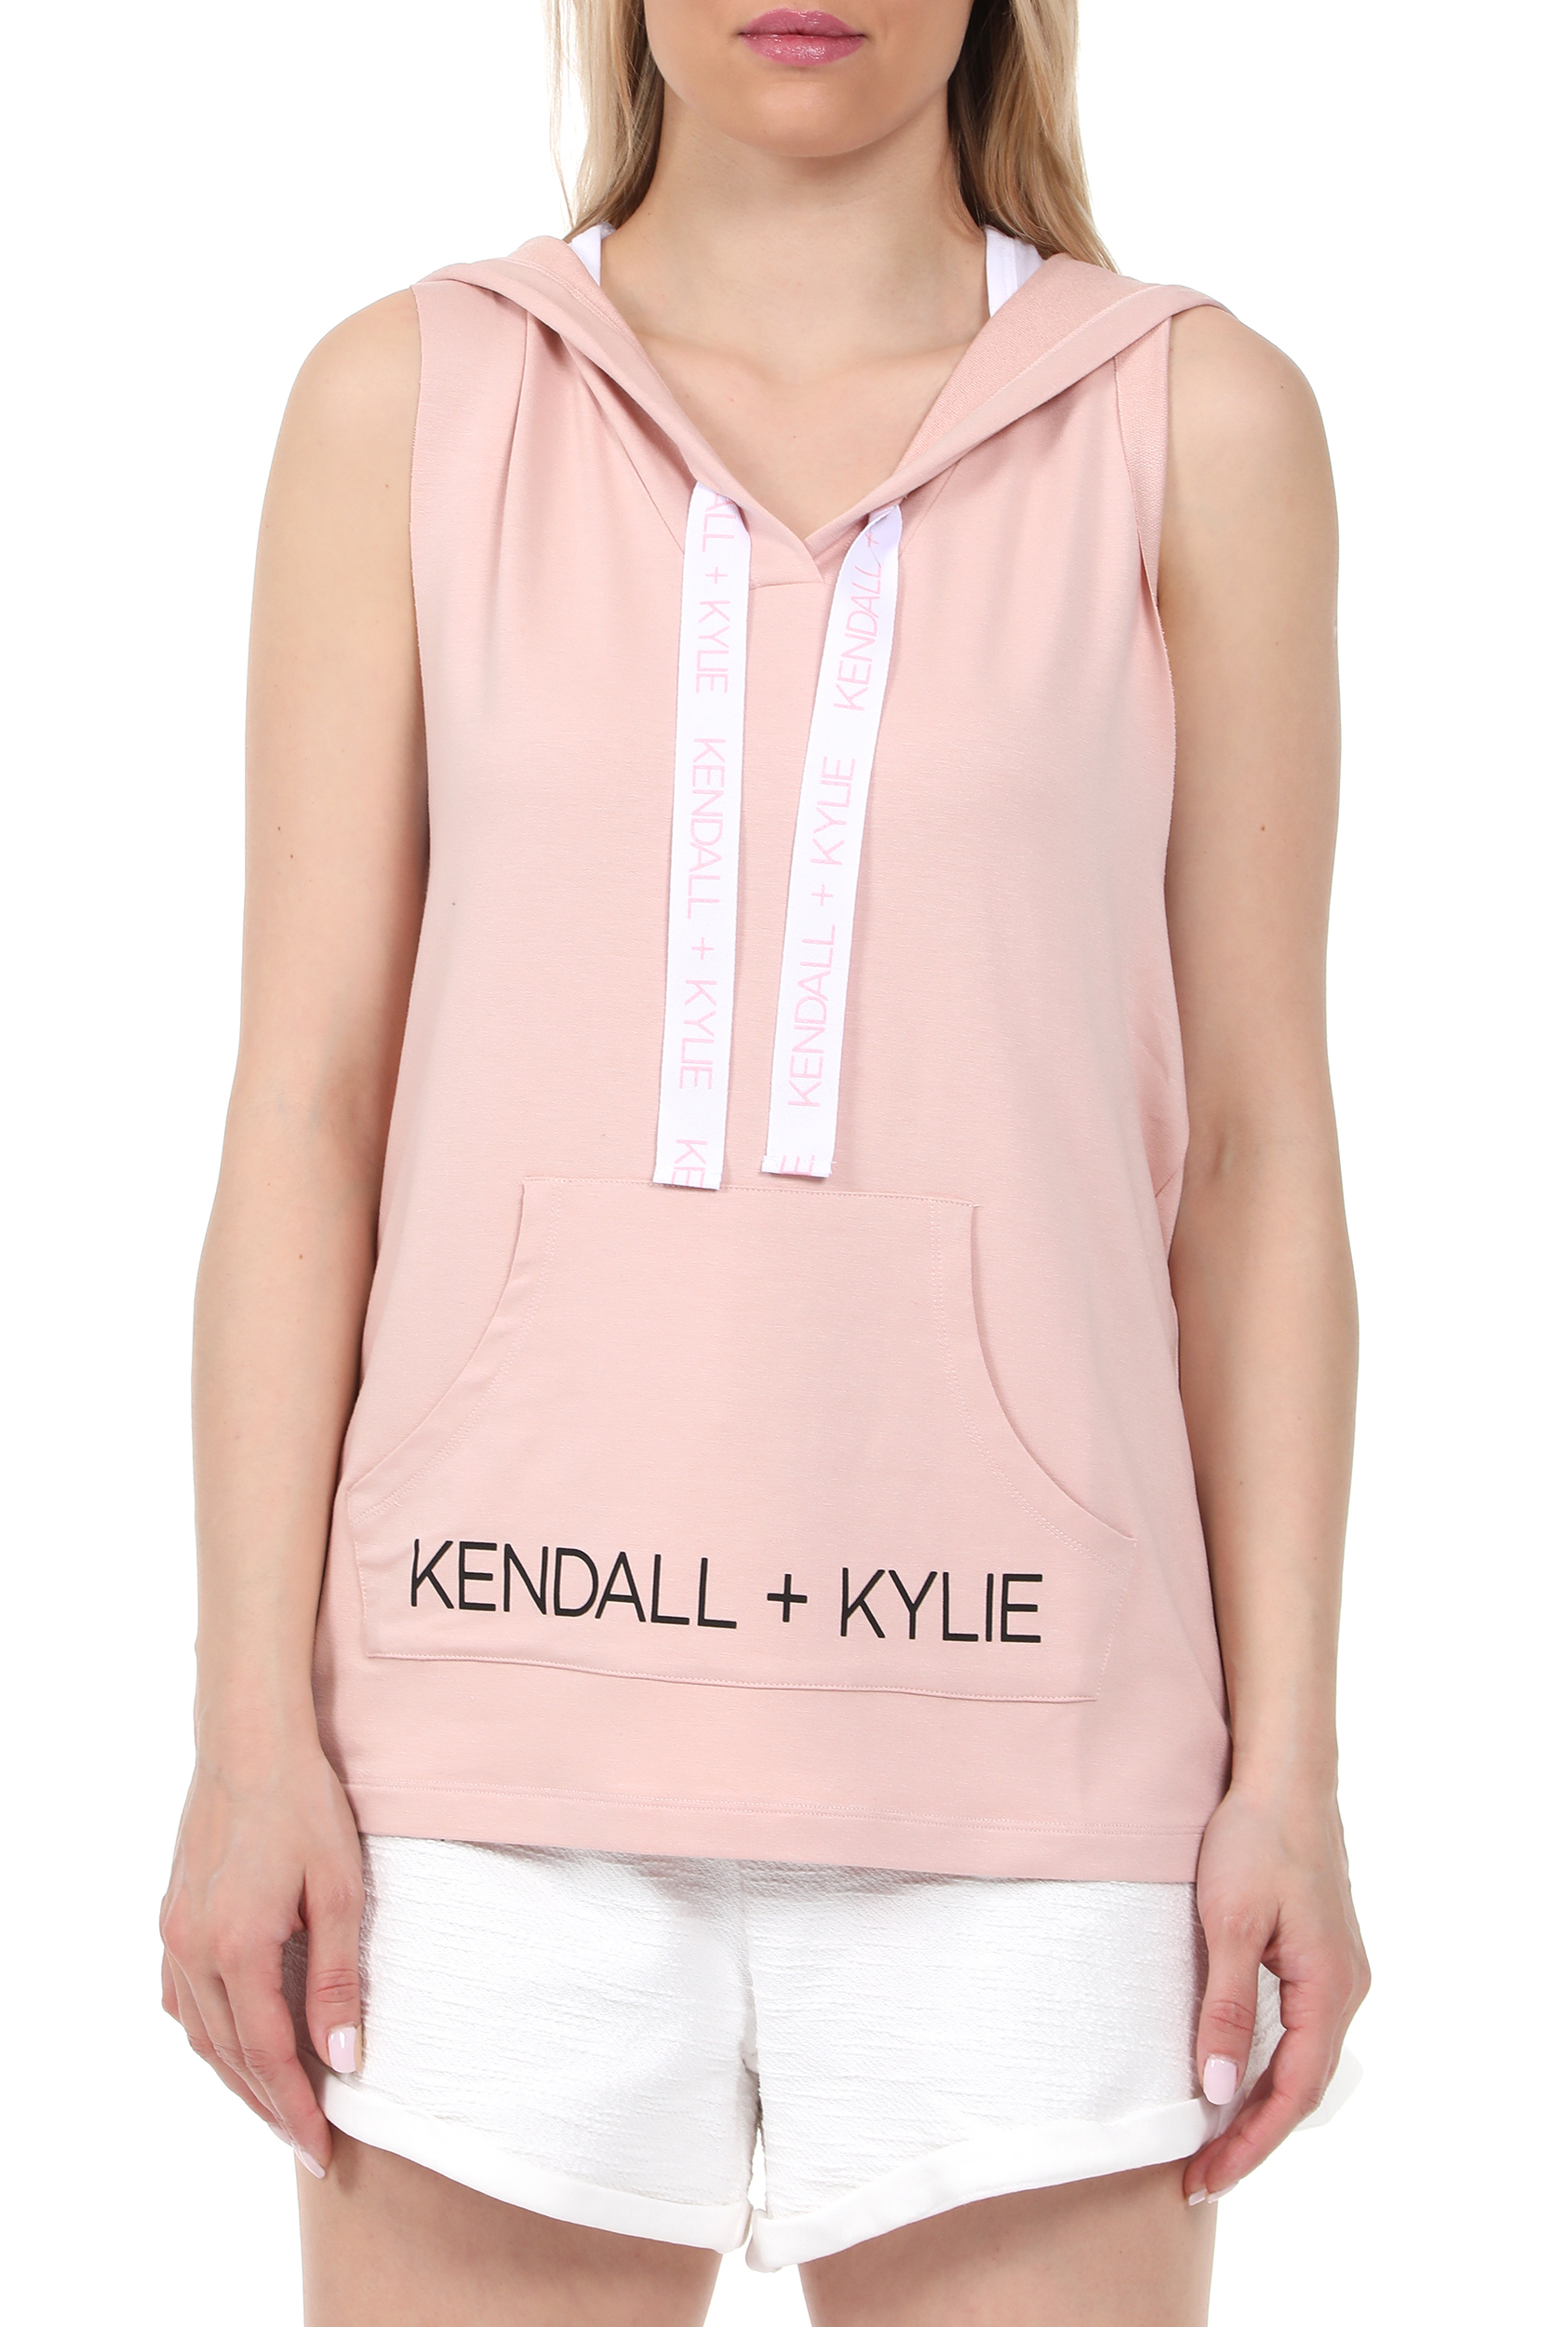 KENDALL + KYLIE – Γυναικεια φουτερ μπλουζα KENDALL + KYLIE W HOODY LOGO ροζ